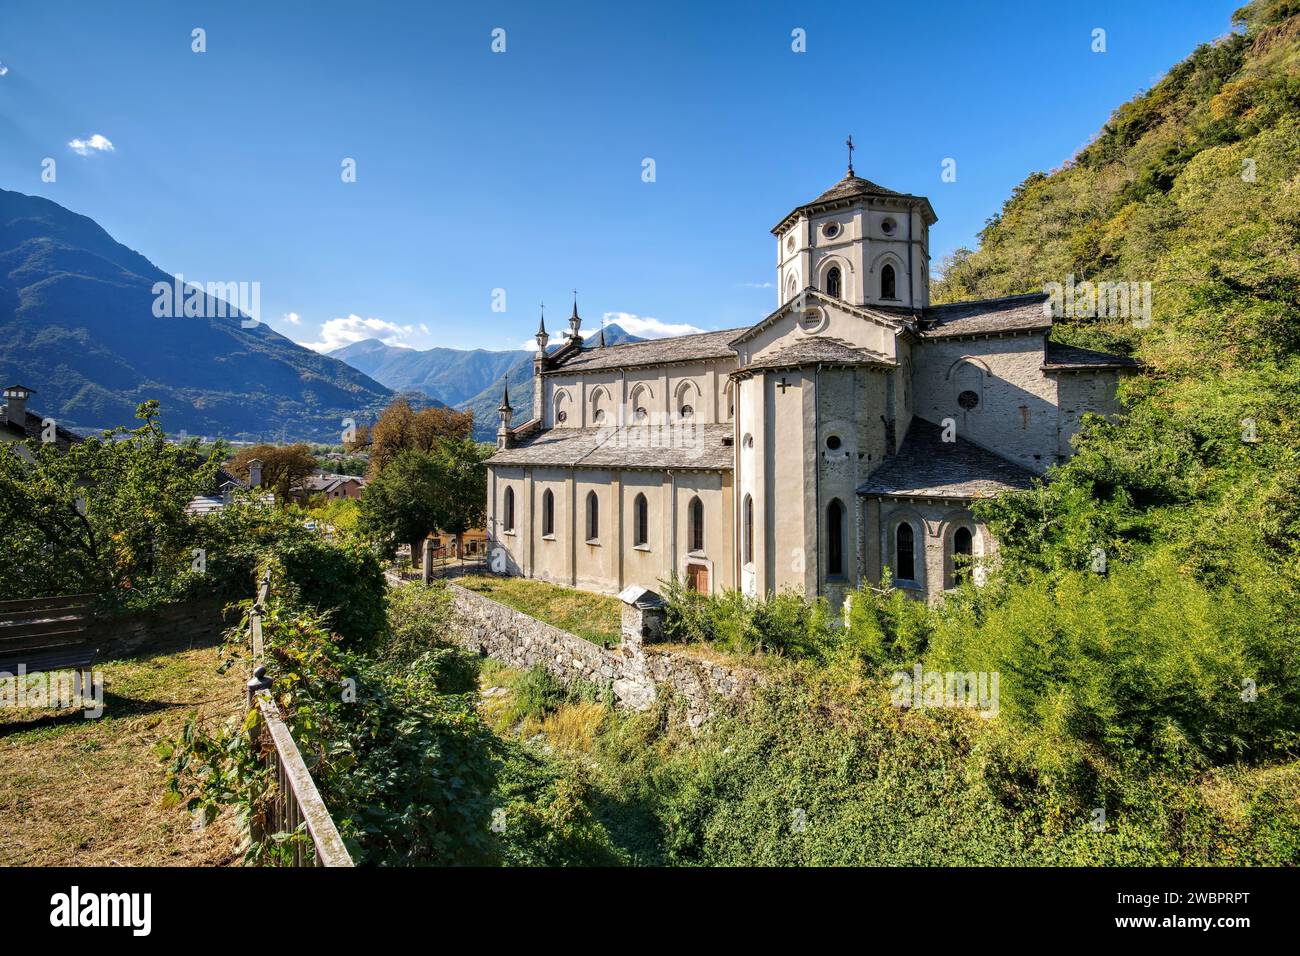 the church Sacro Cuore di Gesu in Italy Stock Photo